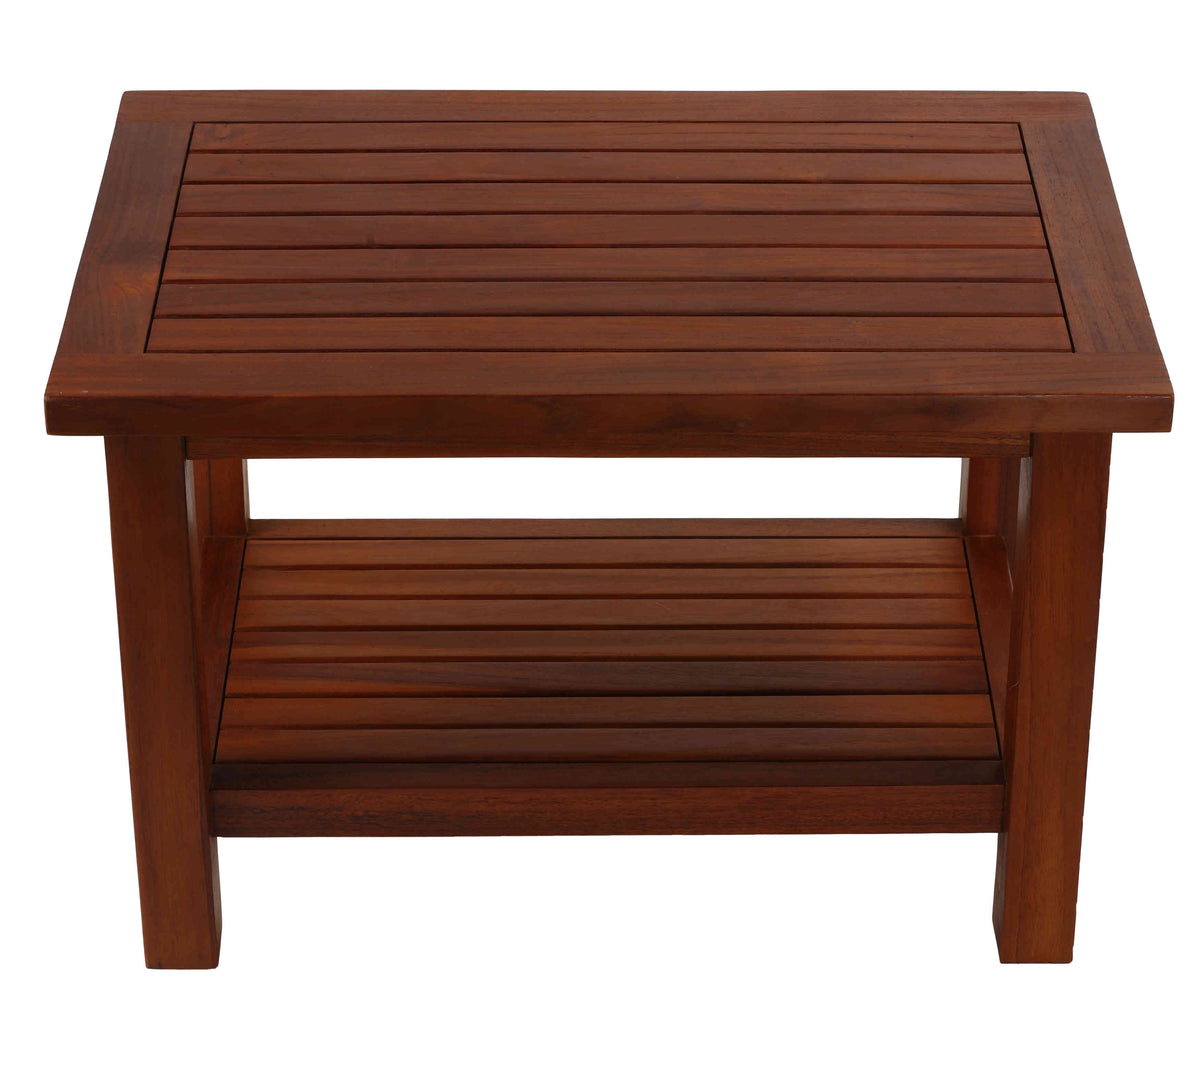 Bare Decor Fieta Solid Teak Wood Coffee End Table